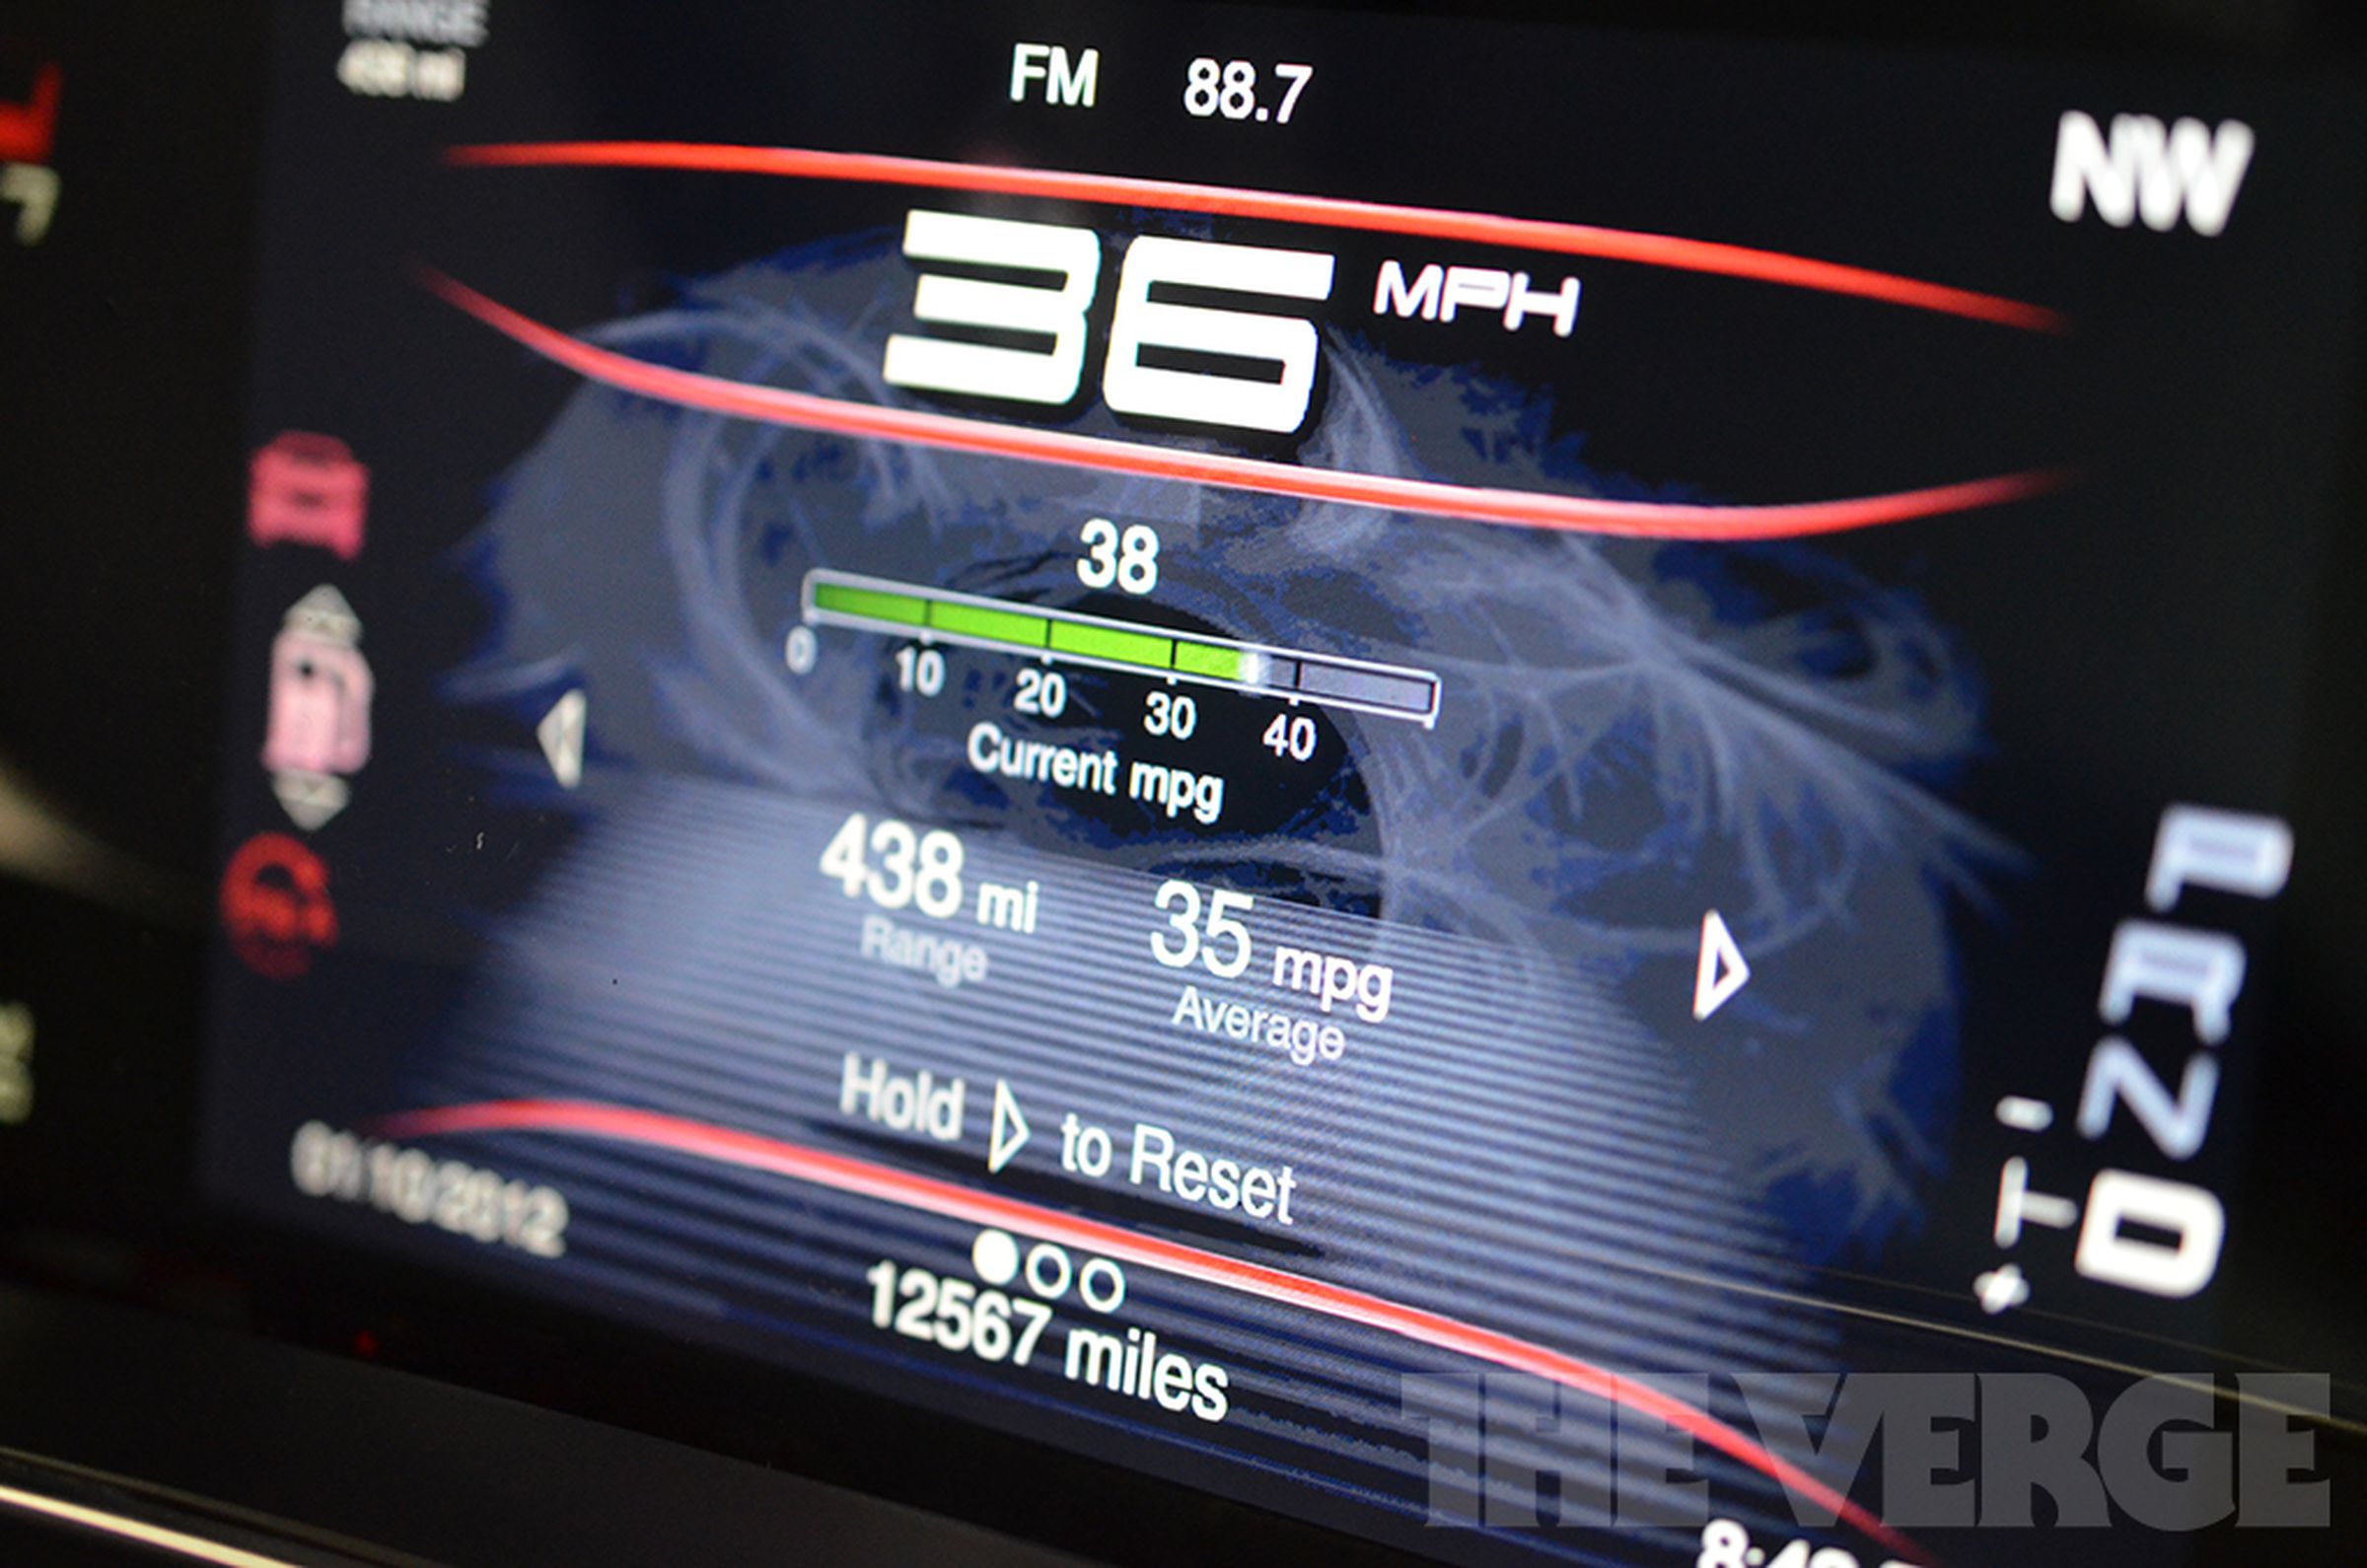 The 2013 Dodge Dart's new digital dashboard photos